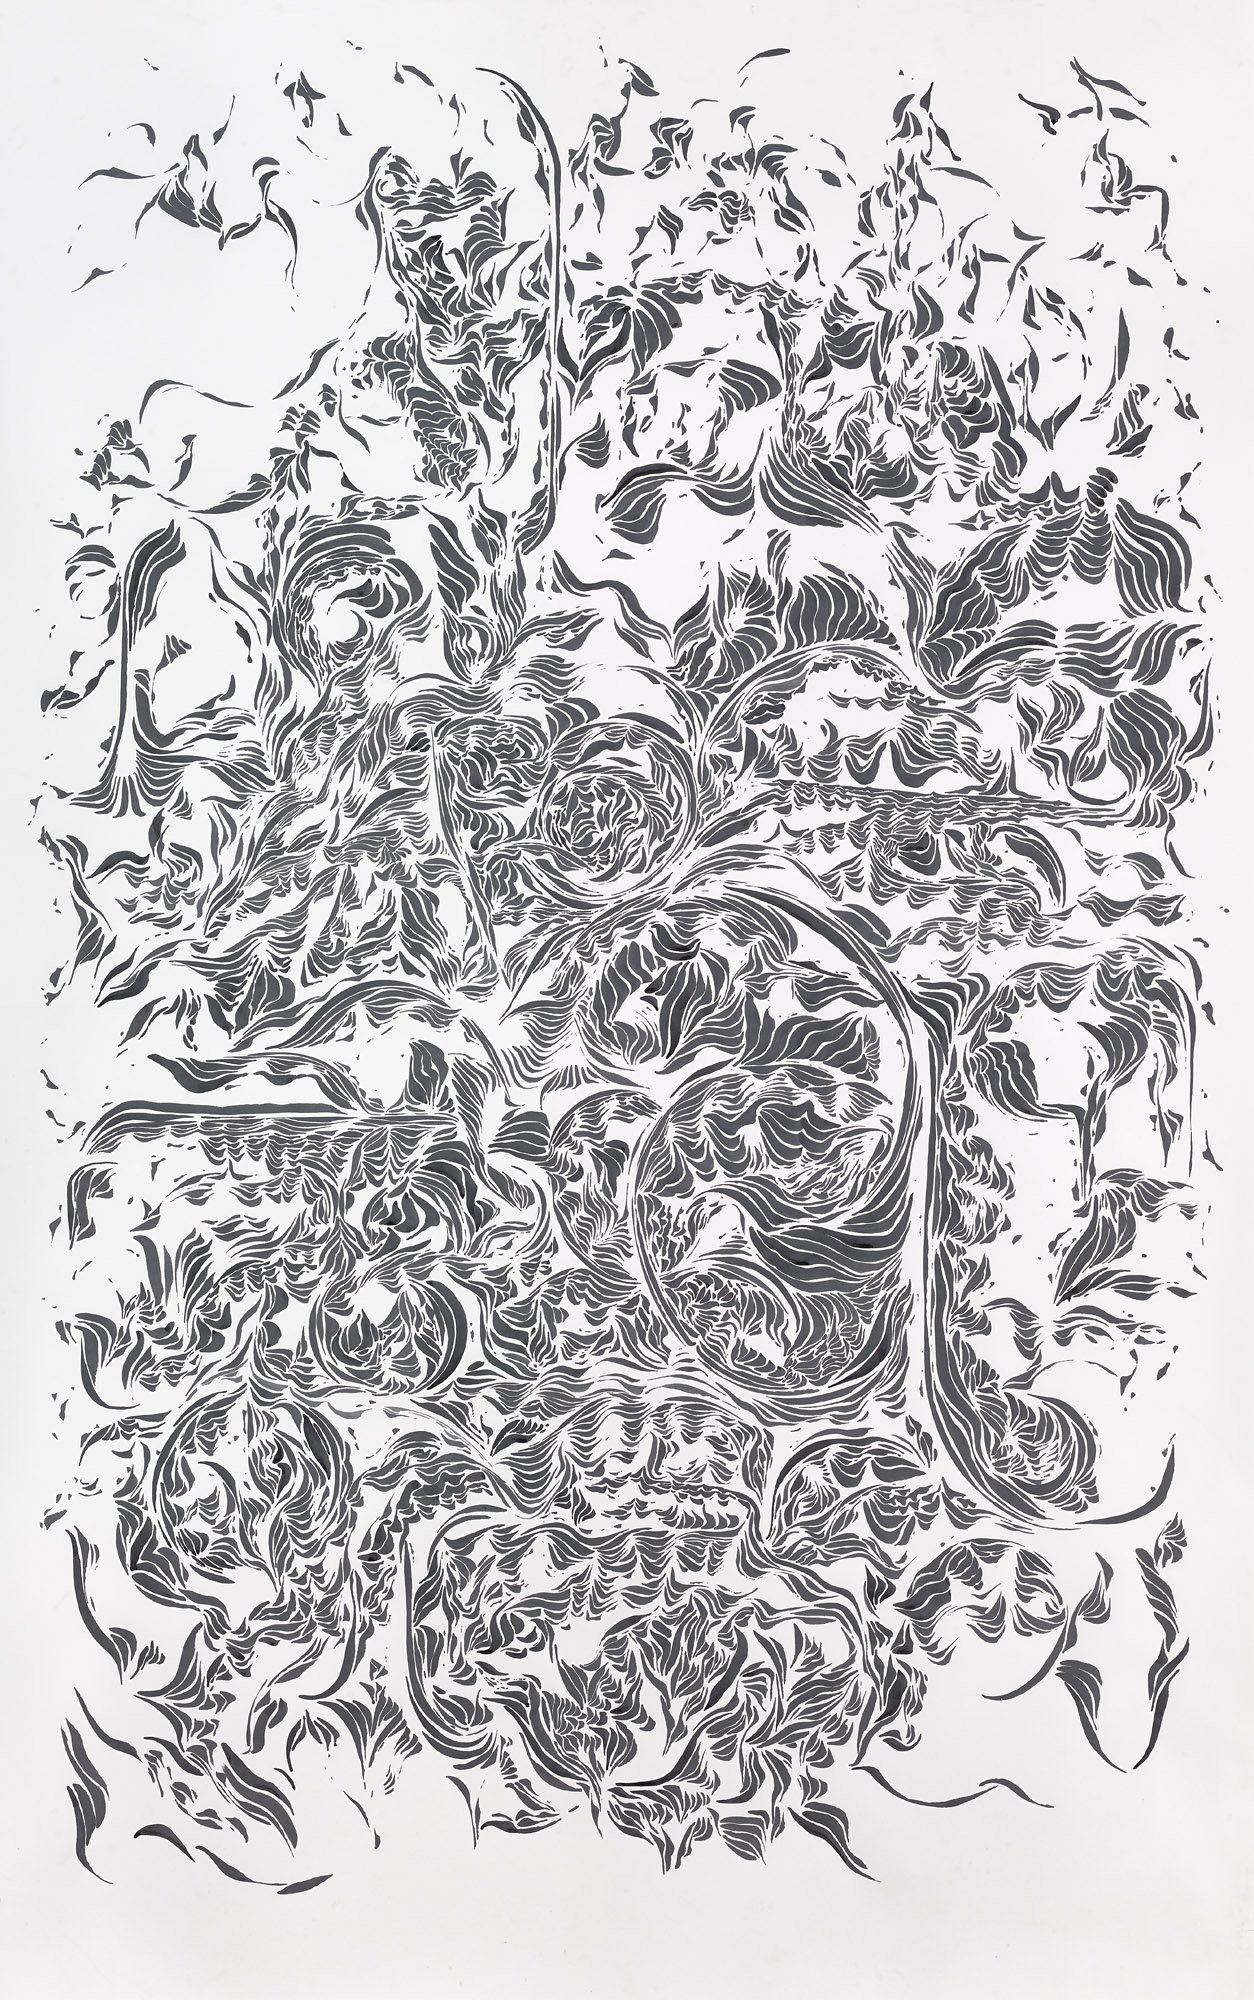 BK P11154 / untitled / ink on paper / 250x150cm / 2015